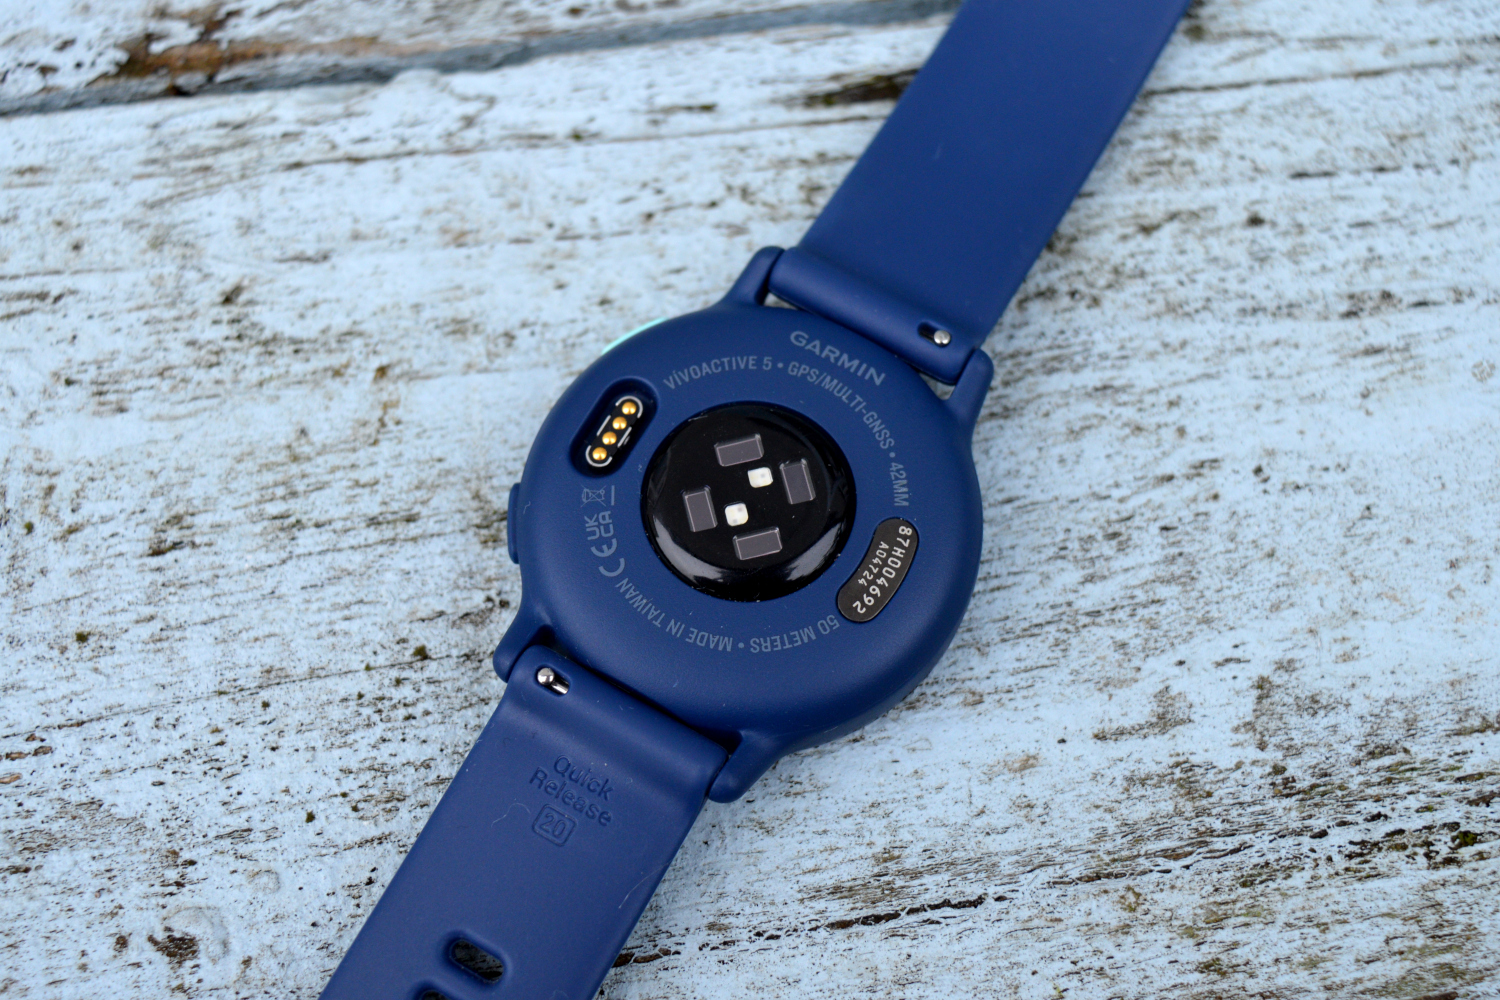 Garmin Vivoactive 5 Review: Apple Watch SE Gets a Run for Its Money - CNET